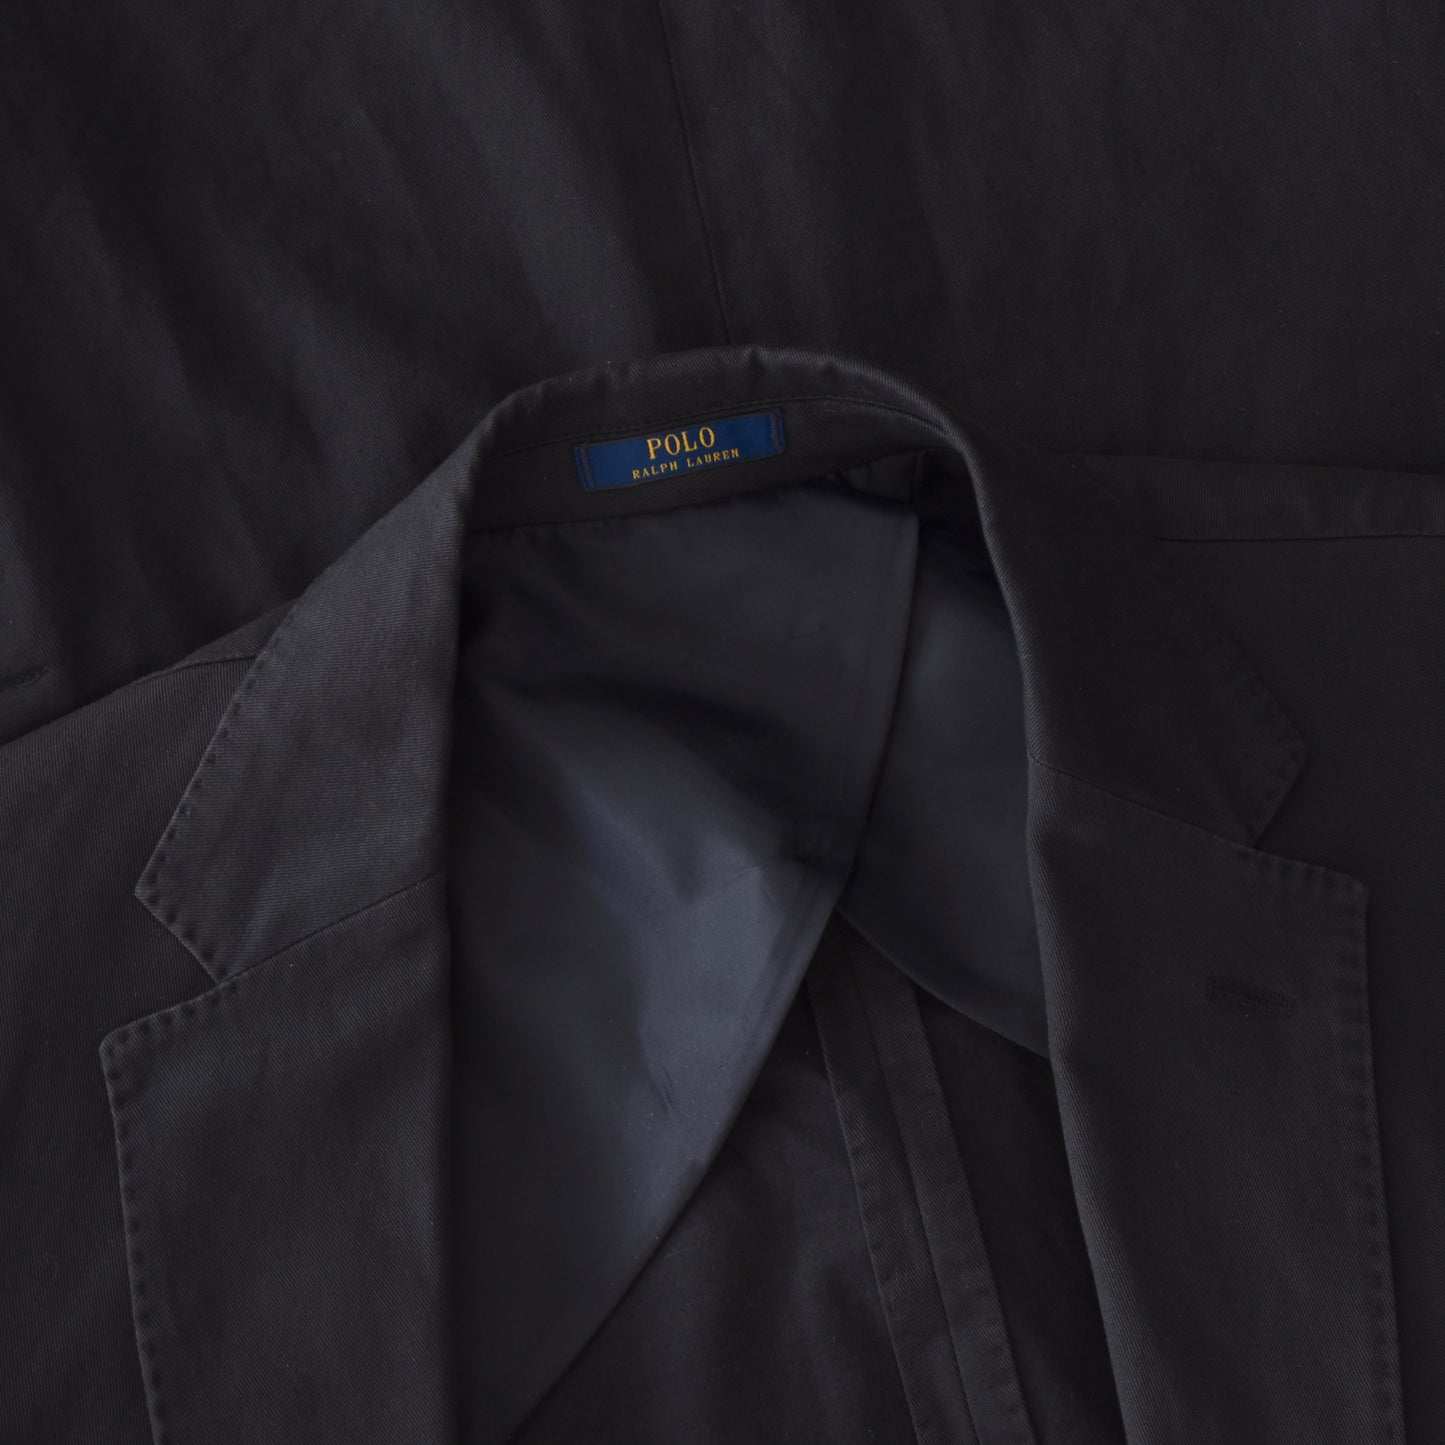 Polo Ralph Lauren Cotton/Linen Jacket Size 44R - Navy Blue